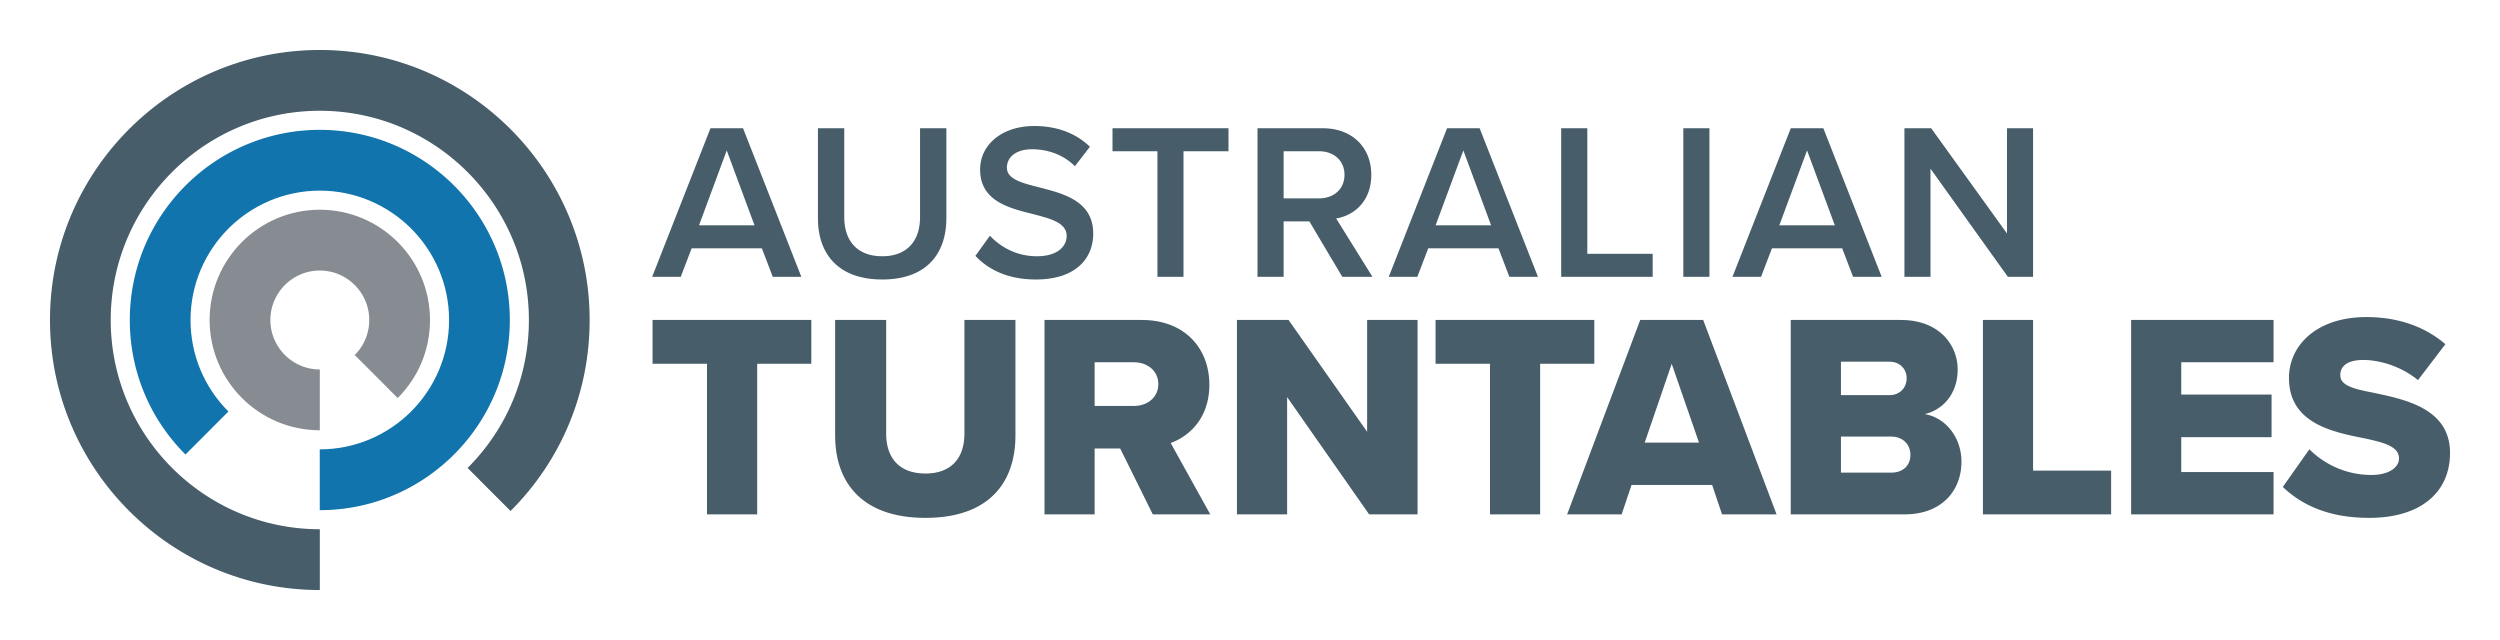 Australian Turntable Co